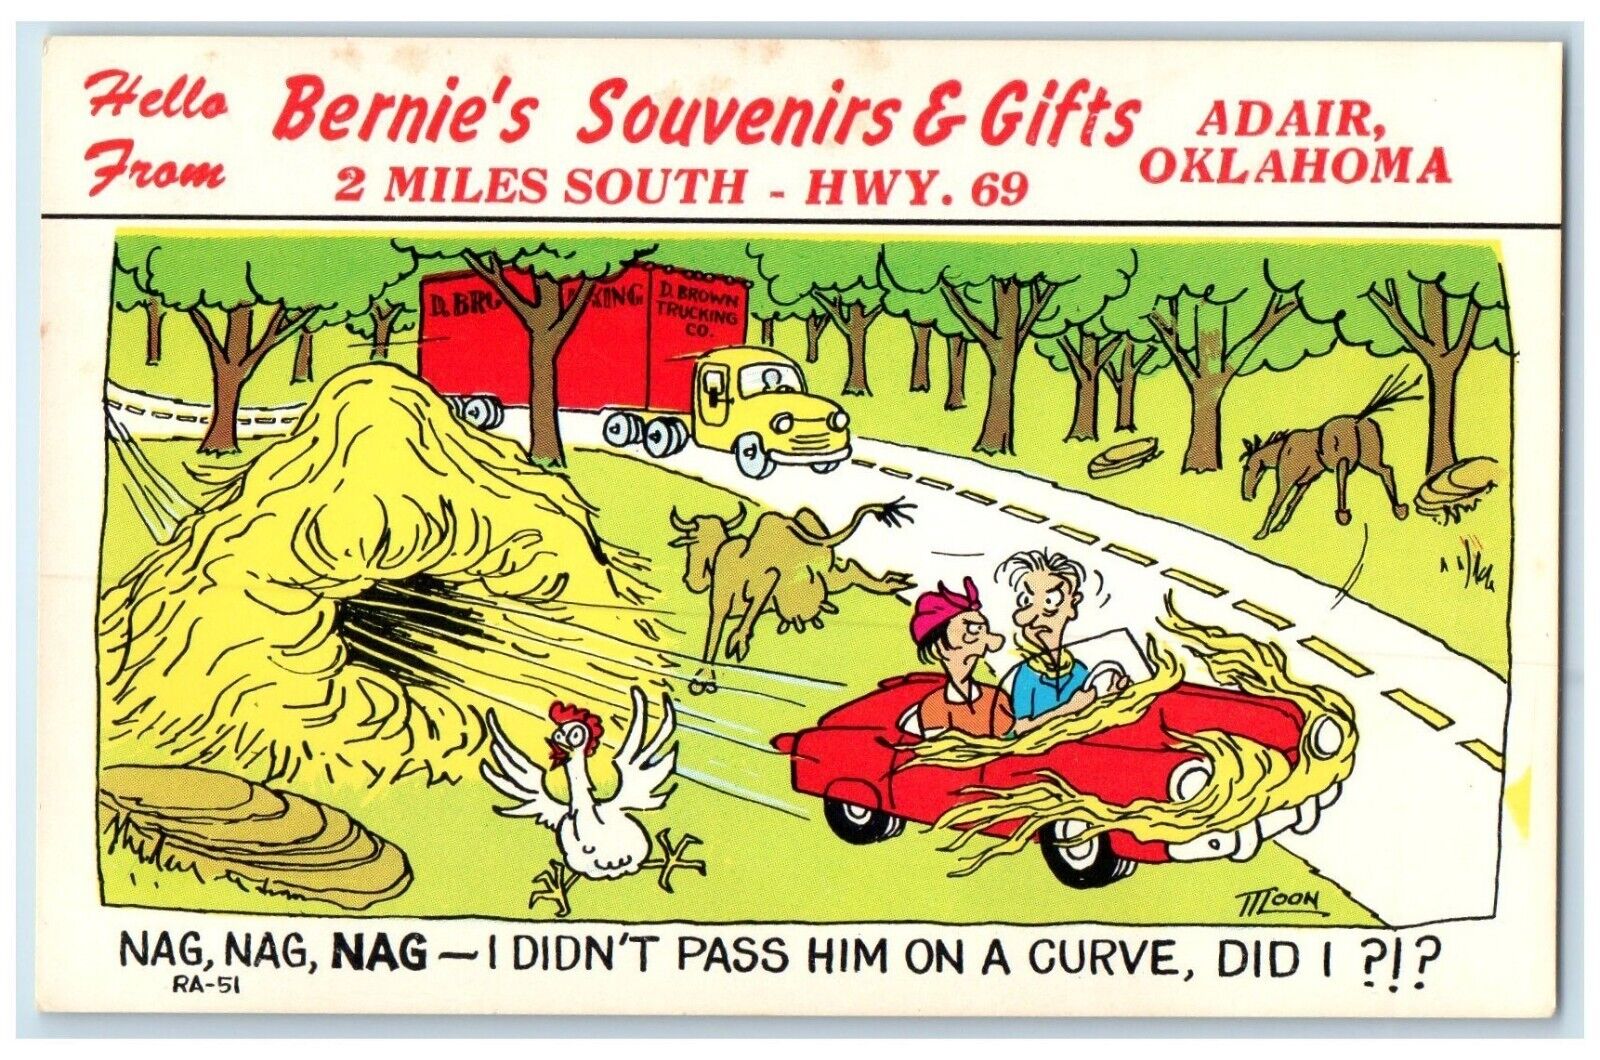 c1940 Hello From Bernie Souvenirs Gift Adair Oklahoma Vintage Laff Gram Postcard